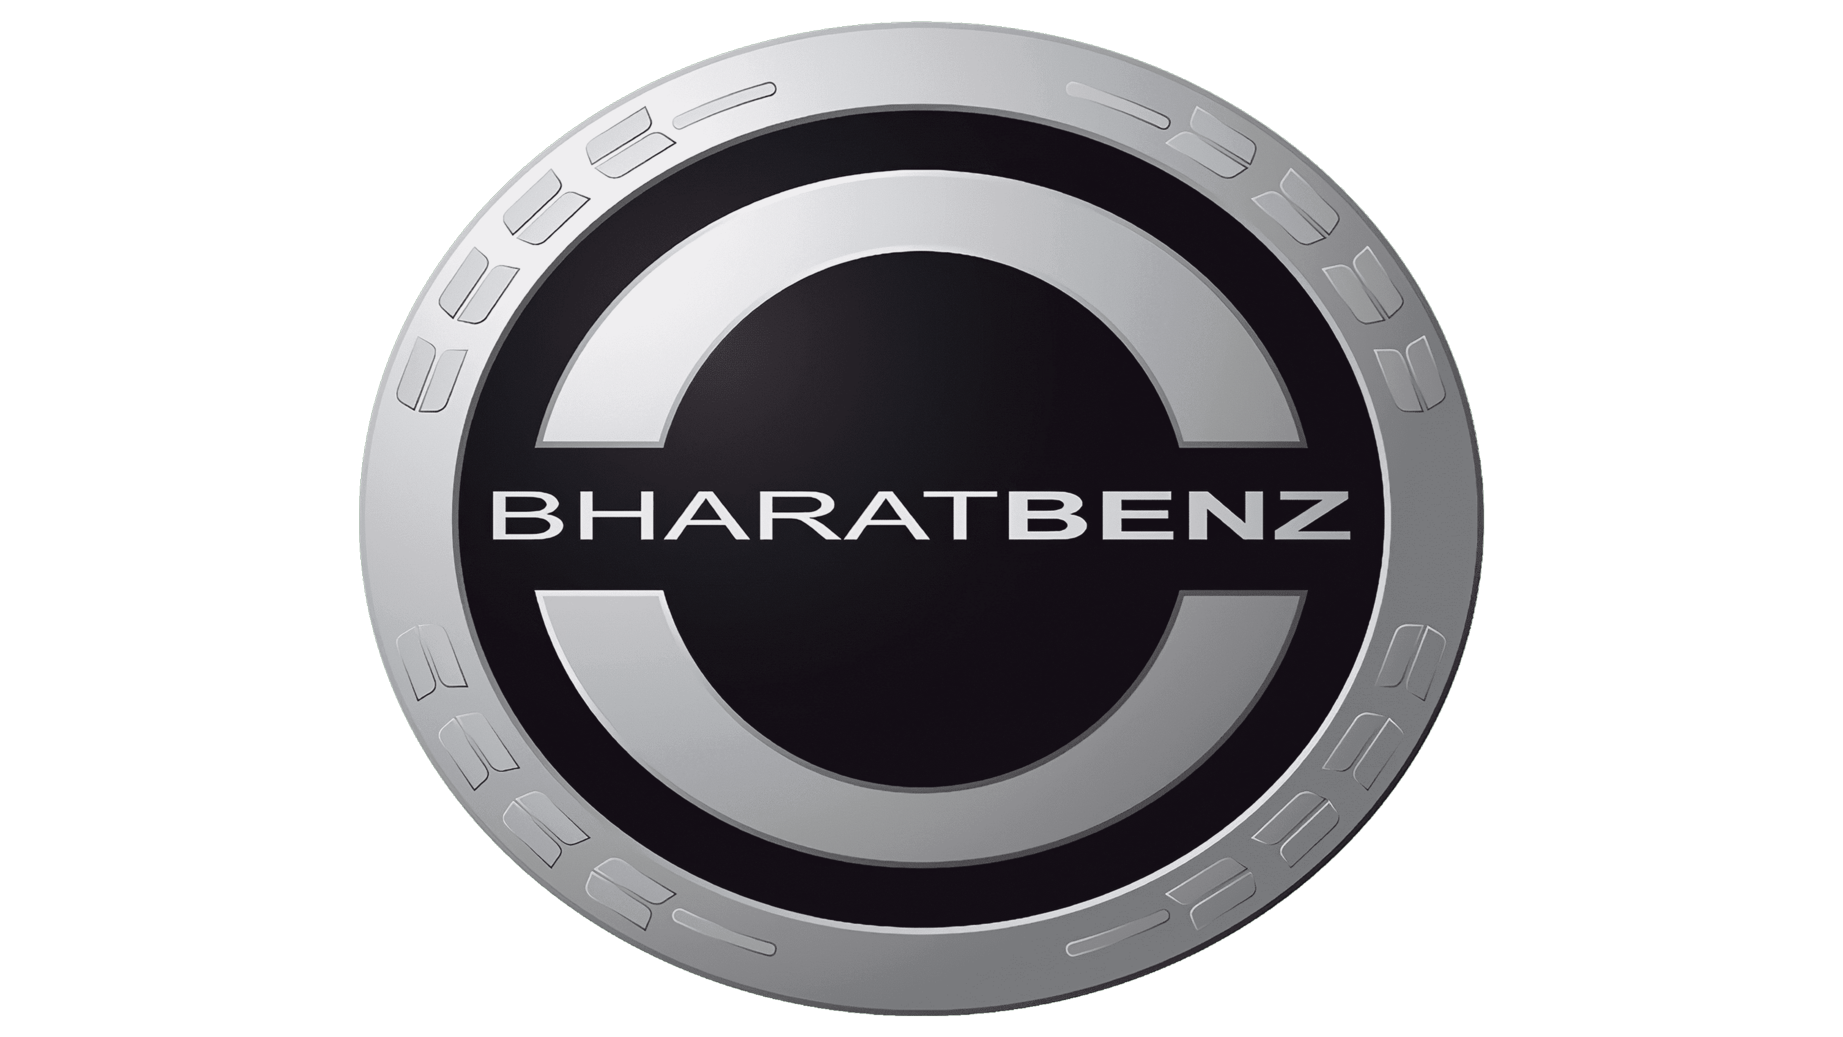 Bharatbenz sign